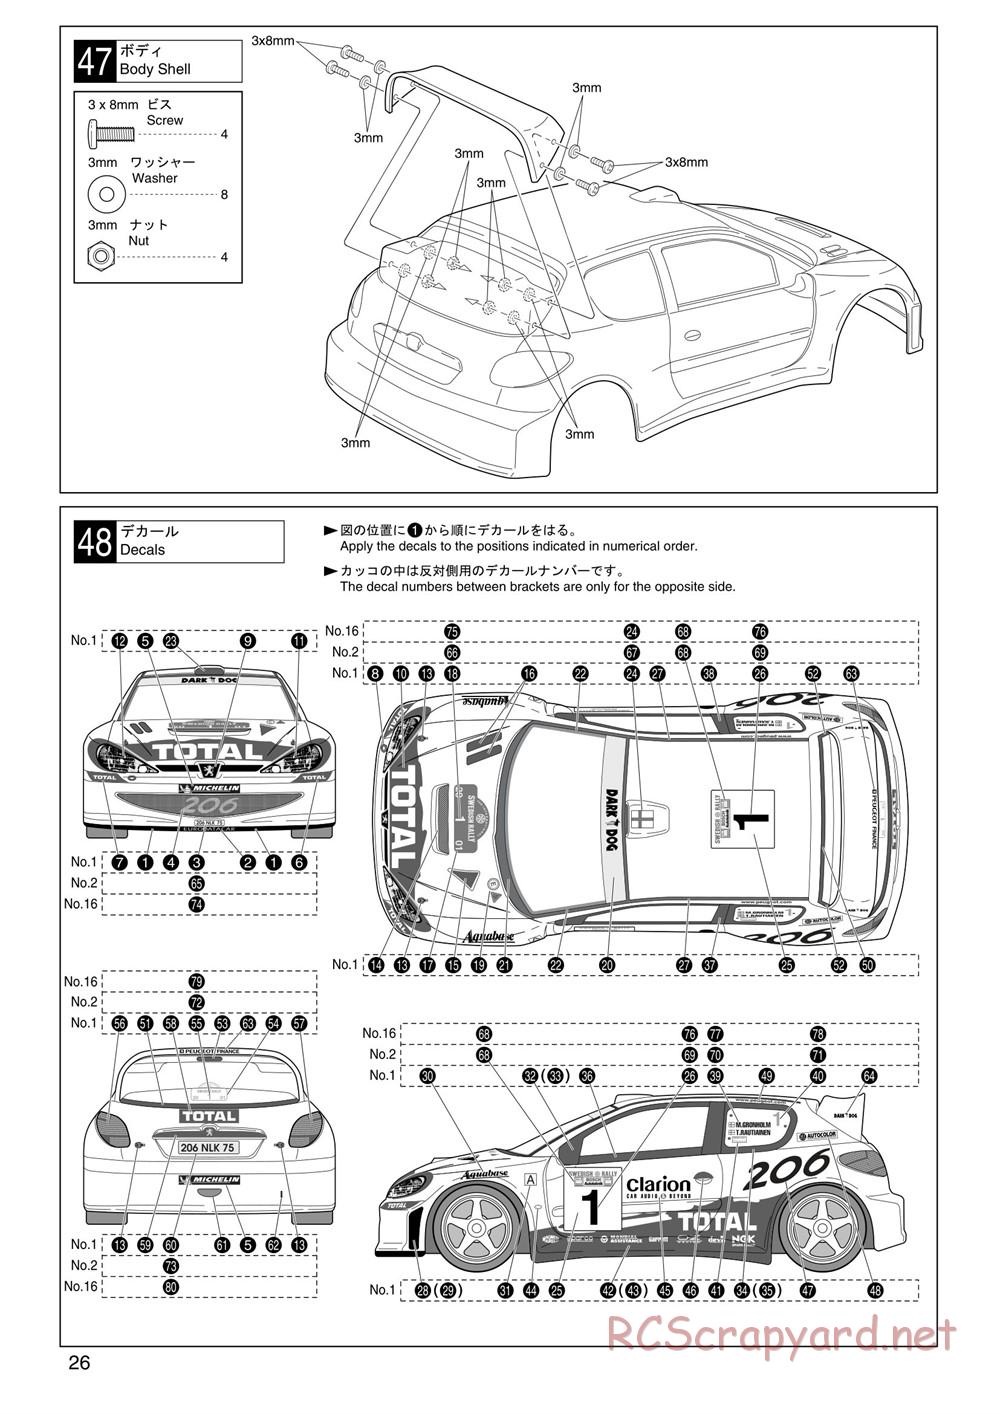 Kyosho - Super Eight GP20 Landmax 2 - Manual - Page 26